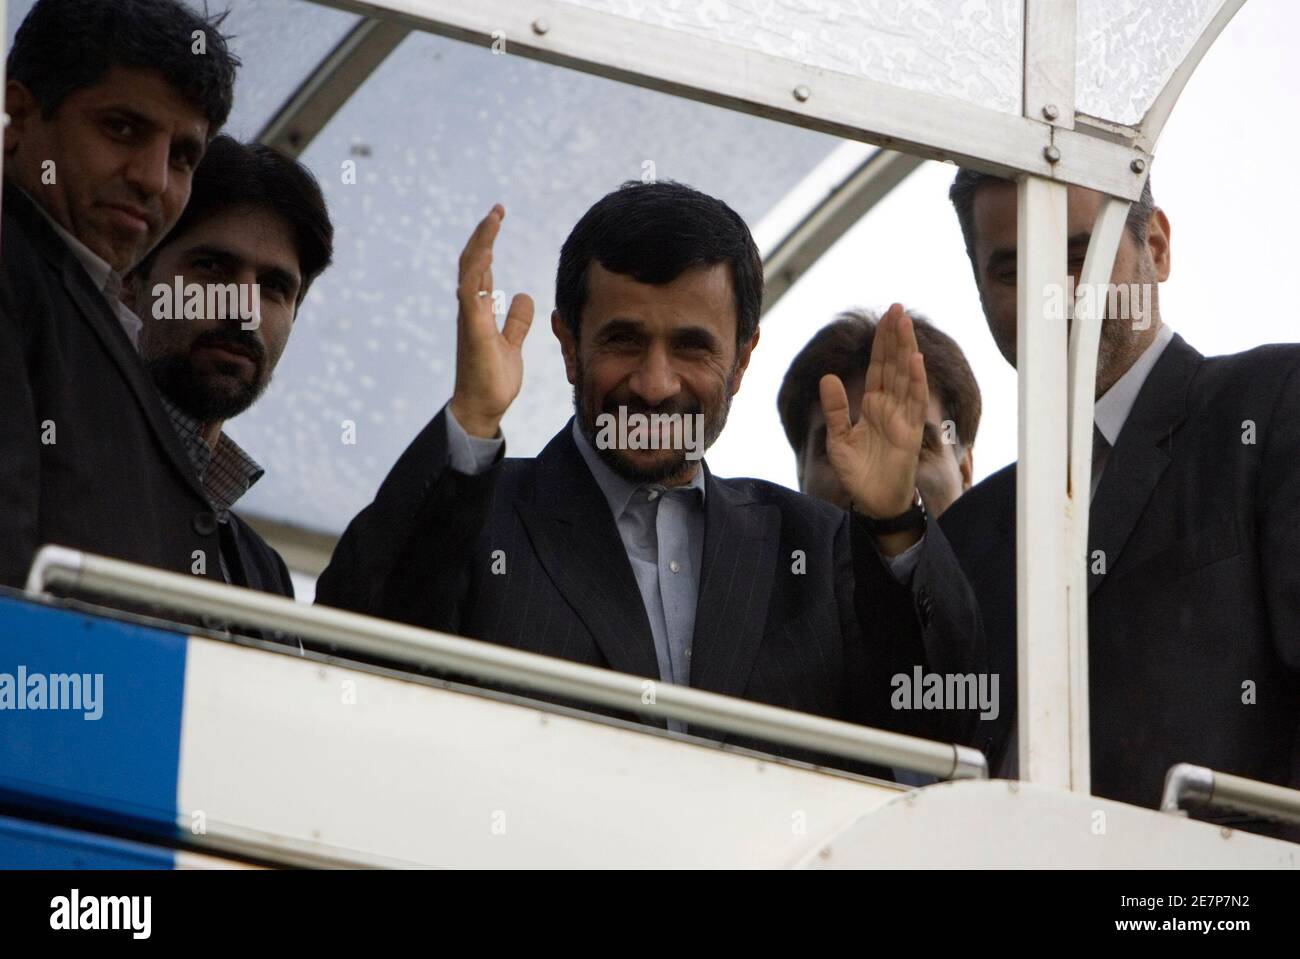 Iran's President Mahmoud Ahmadinejad waves to officials, as he leaves for Saudi Arabia, from Tehran's Mehrabad airport December 17, 2007. Ahmadinejad is heading to the Muslim holy city of Mecca for the annual haj pilgrimage.  REUTERS/Raheb Homavandi (IRAN) Stock Photo